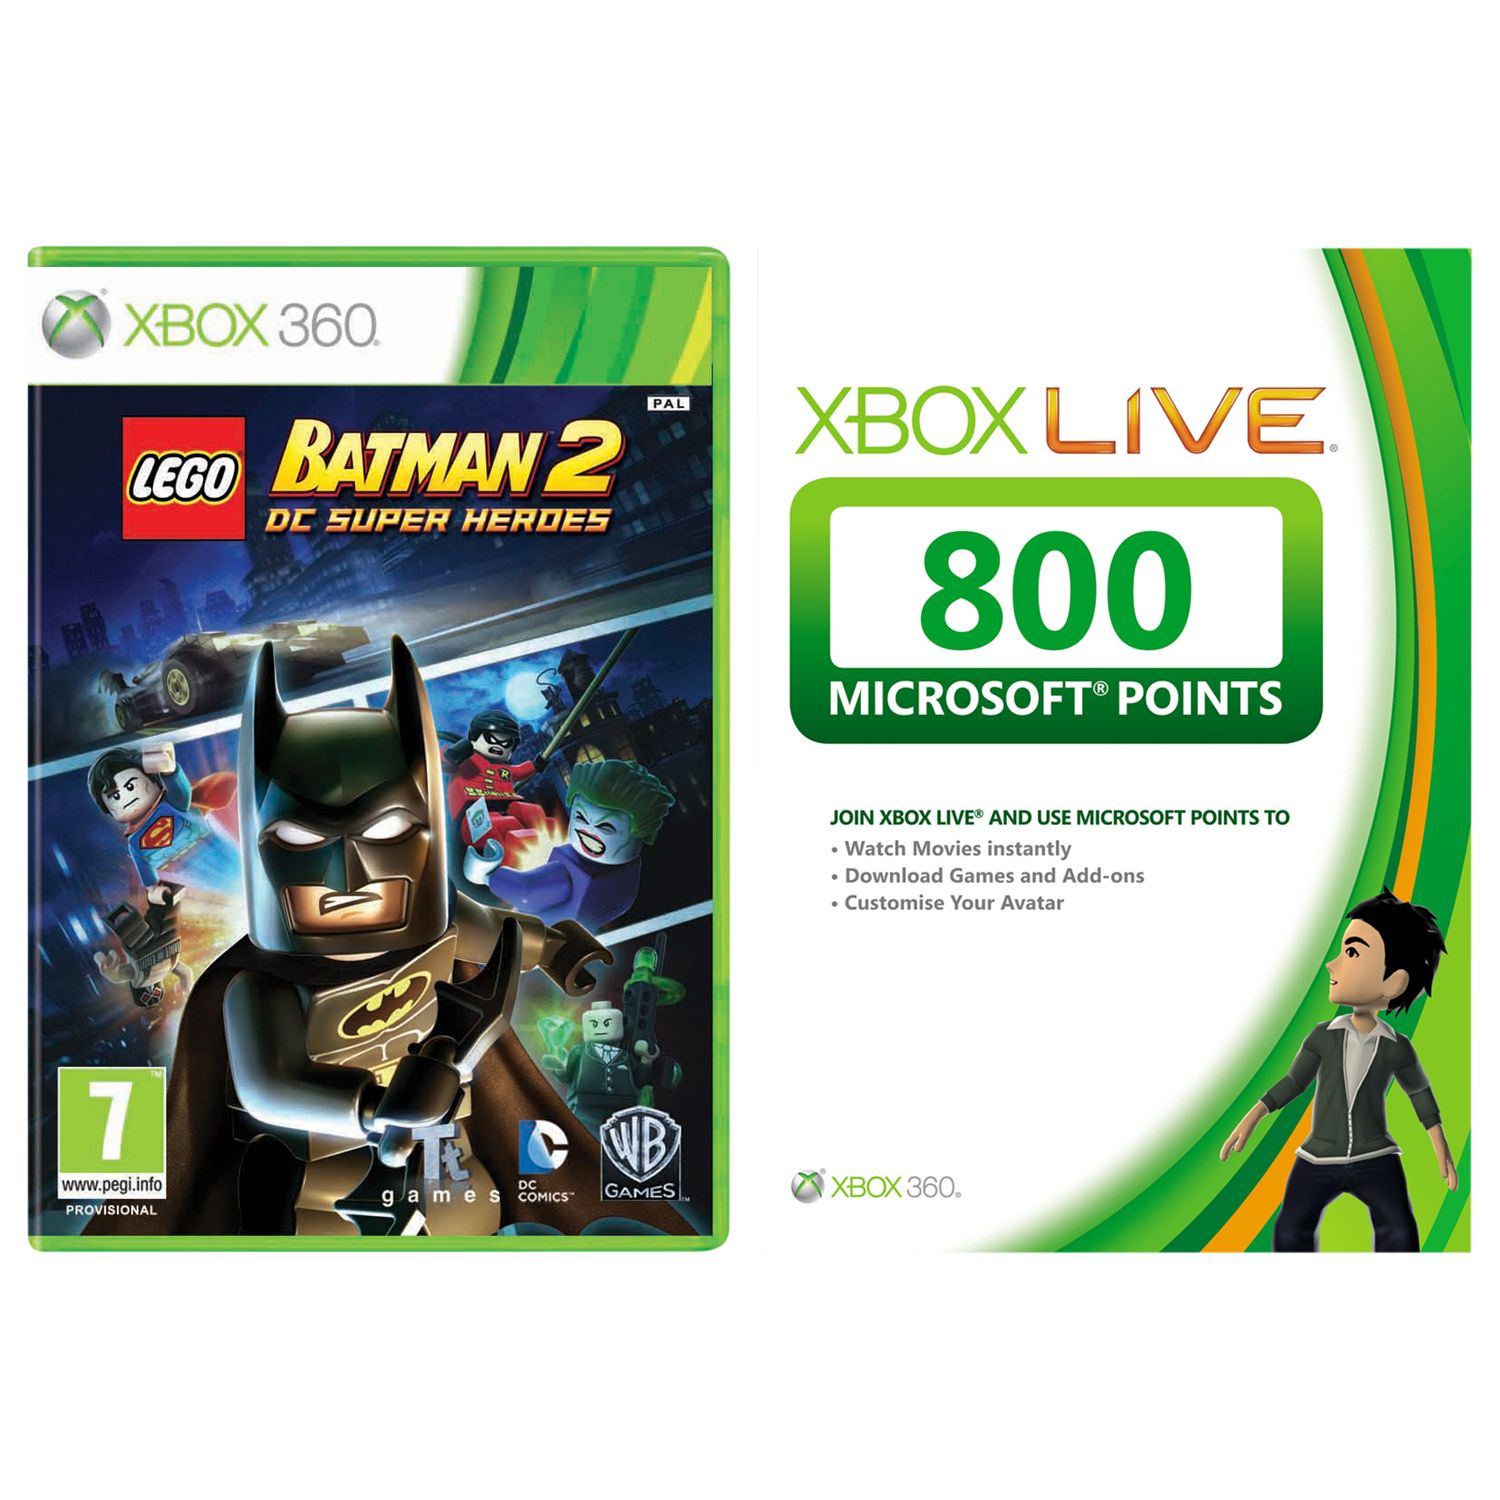 Lego Batman 2: DC Super Heroes, Xbox 360 with 800 Live Points | annaa90ellenbergera9275a